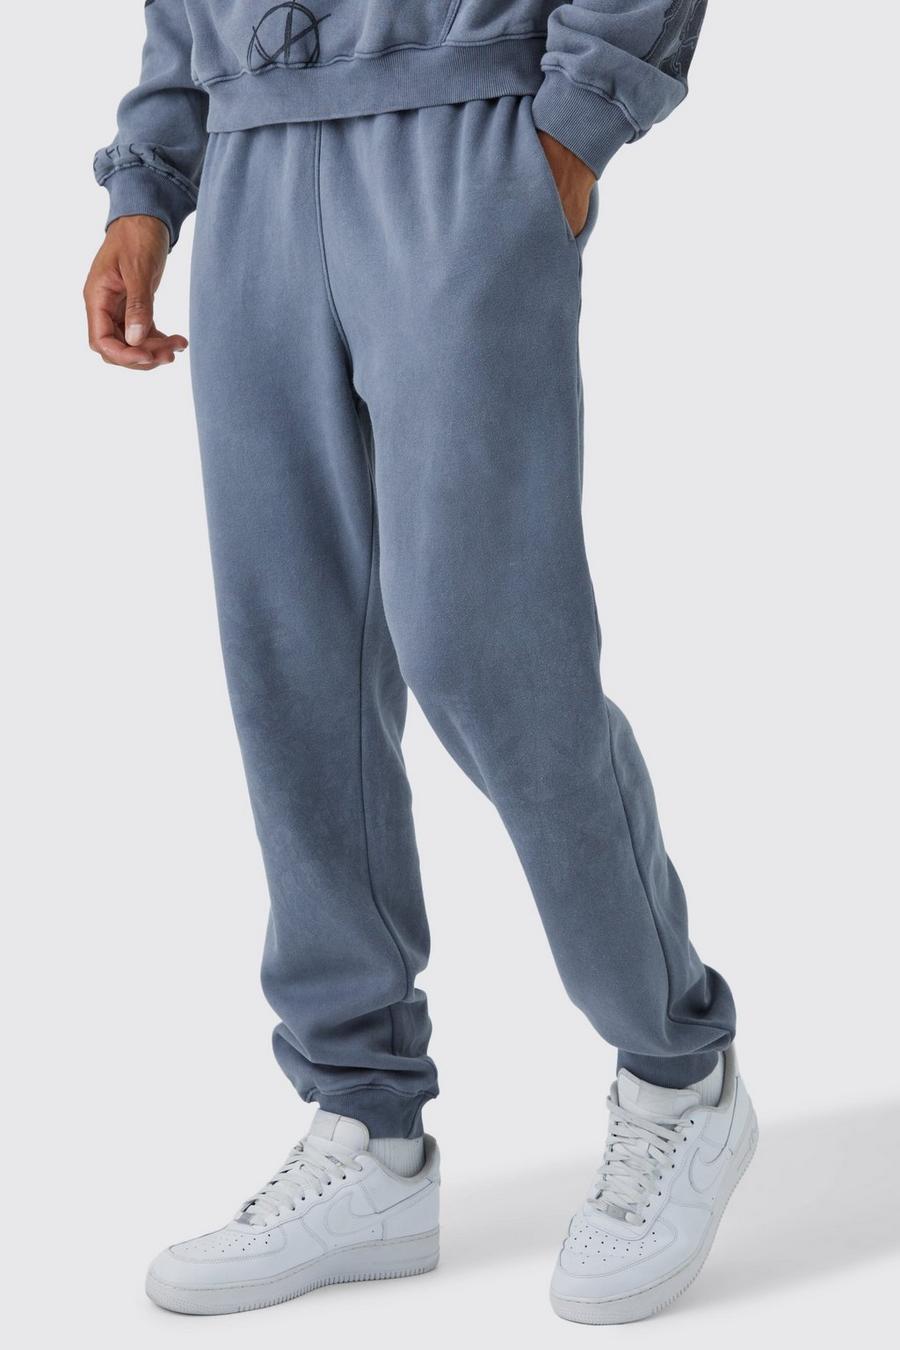 Pantaloni tuta Tall in slavato acido, Charcoal gris